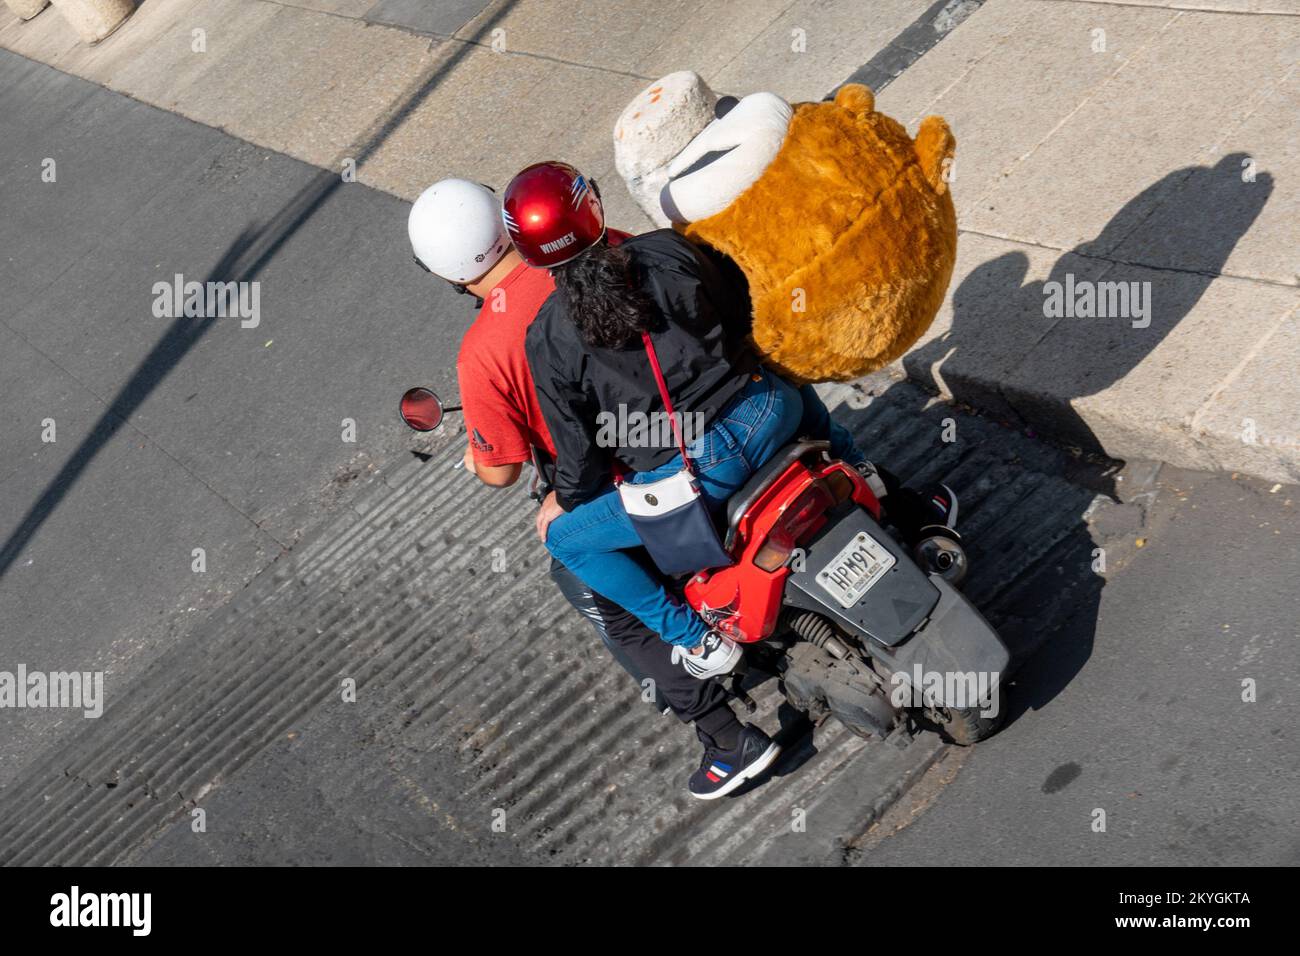 Street Life, Mexico city Giant Teddy Bear on Motorcycle Stock Photo